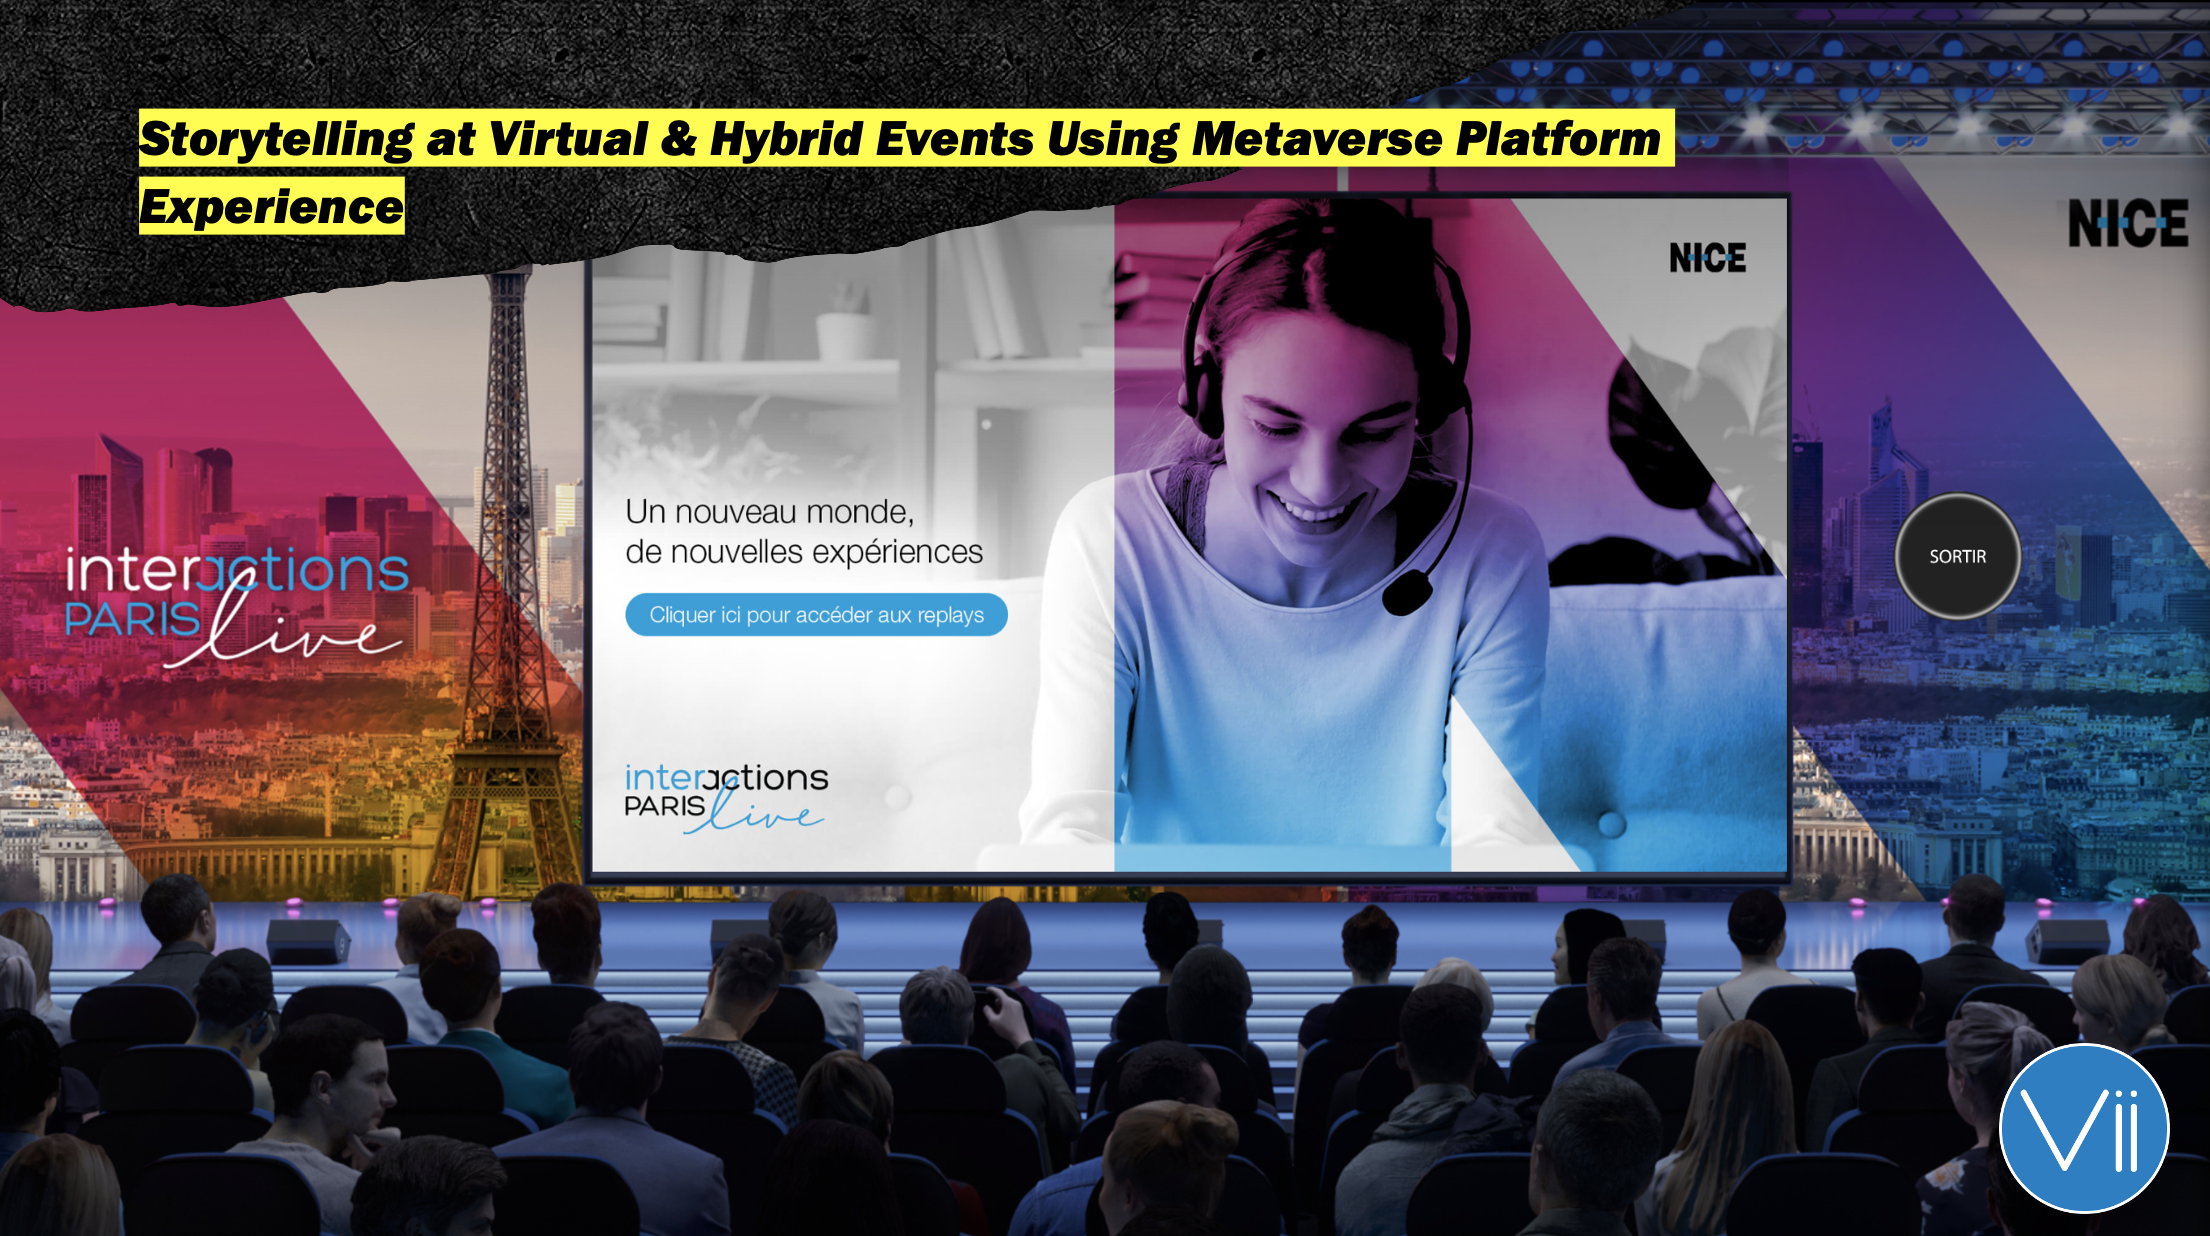 Storytelling at Virtual & Hybrid Events Using Metaverse Platform Experience